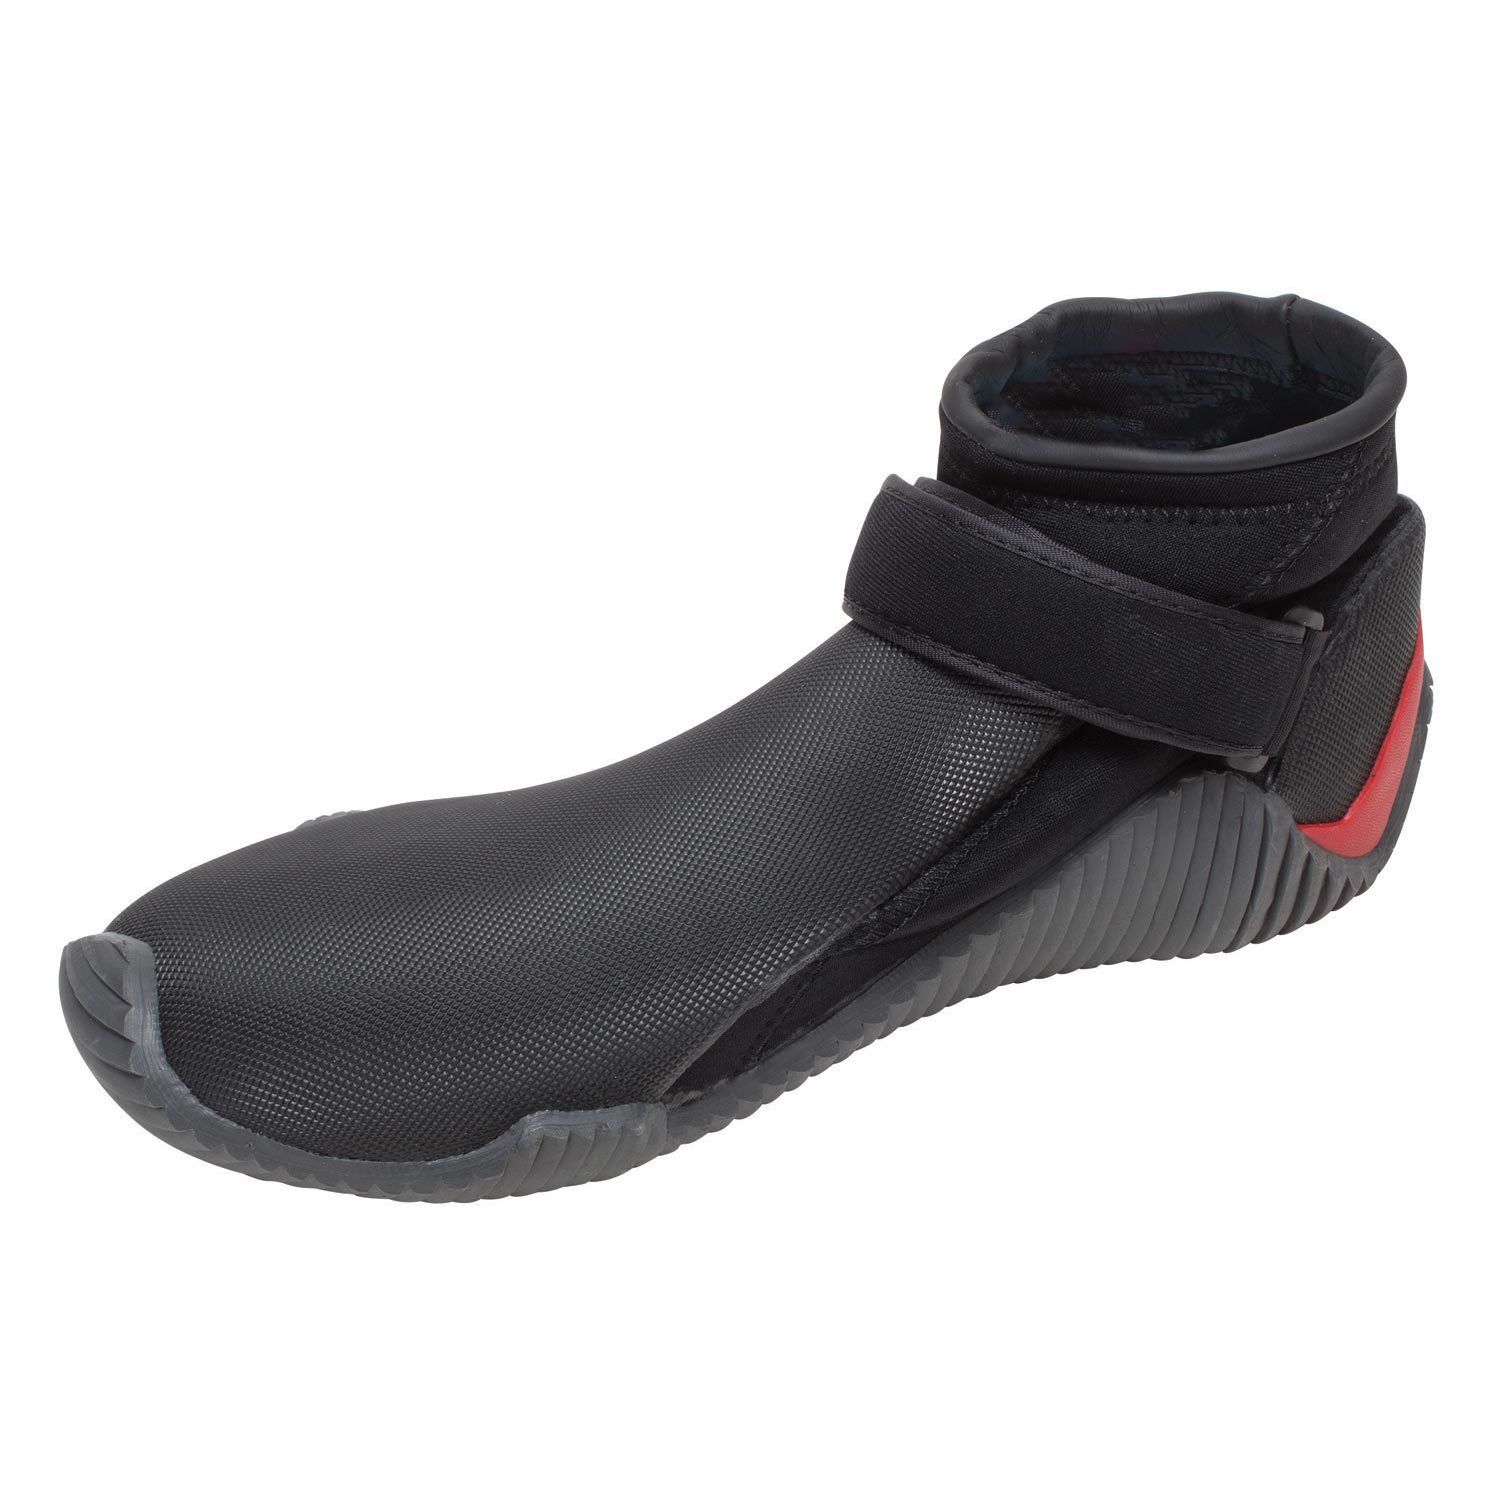 Blindstitched seams for waterproof seal Unisex Waterproof Gill Aquatech 3MM Neoprene Wetsuit Shoes Black 